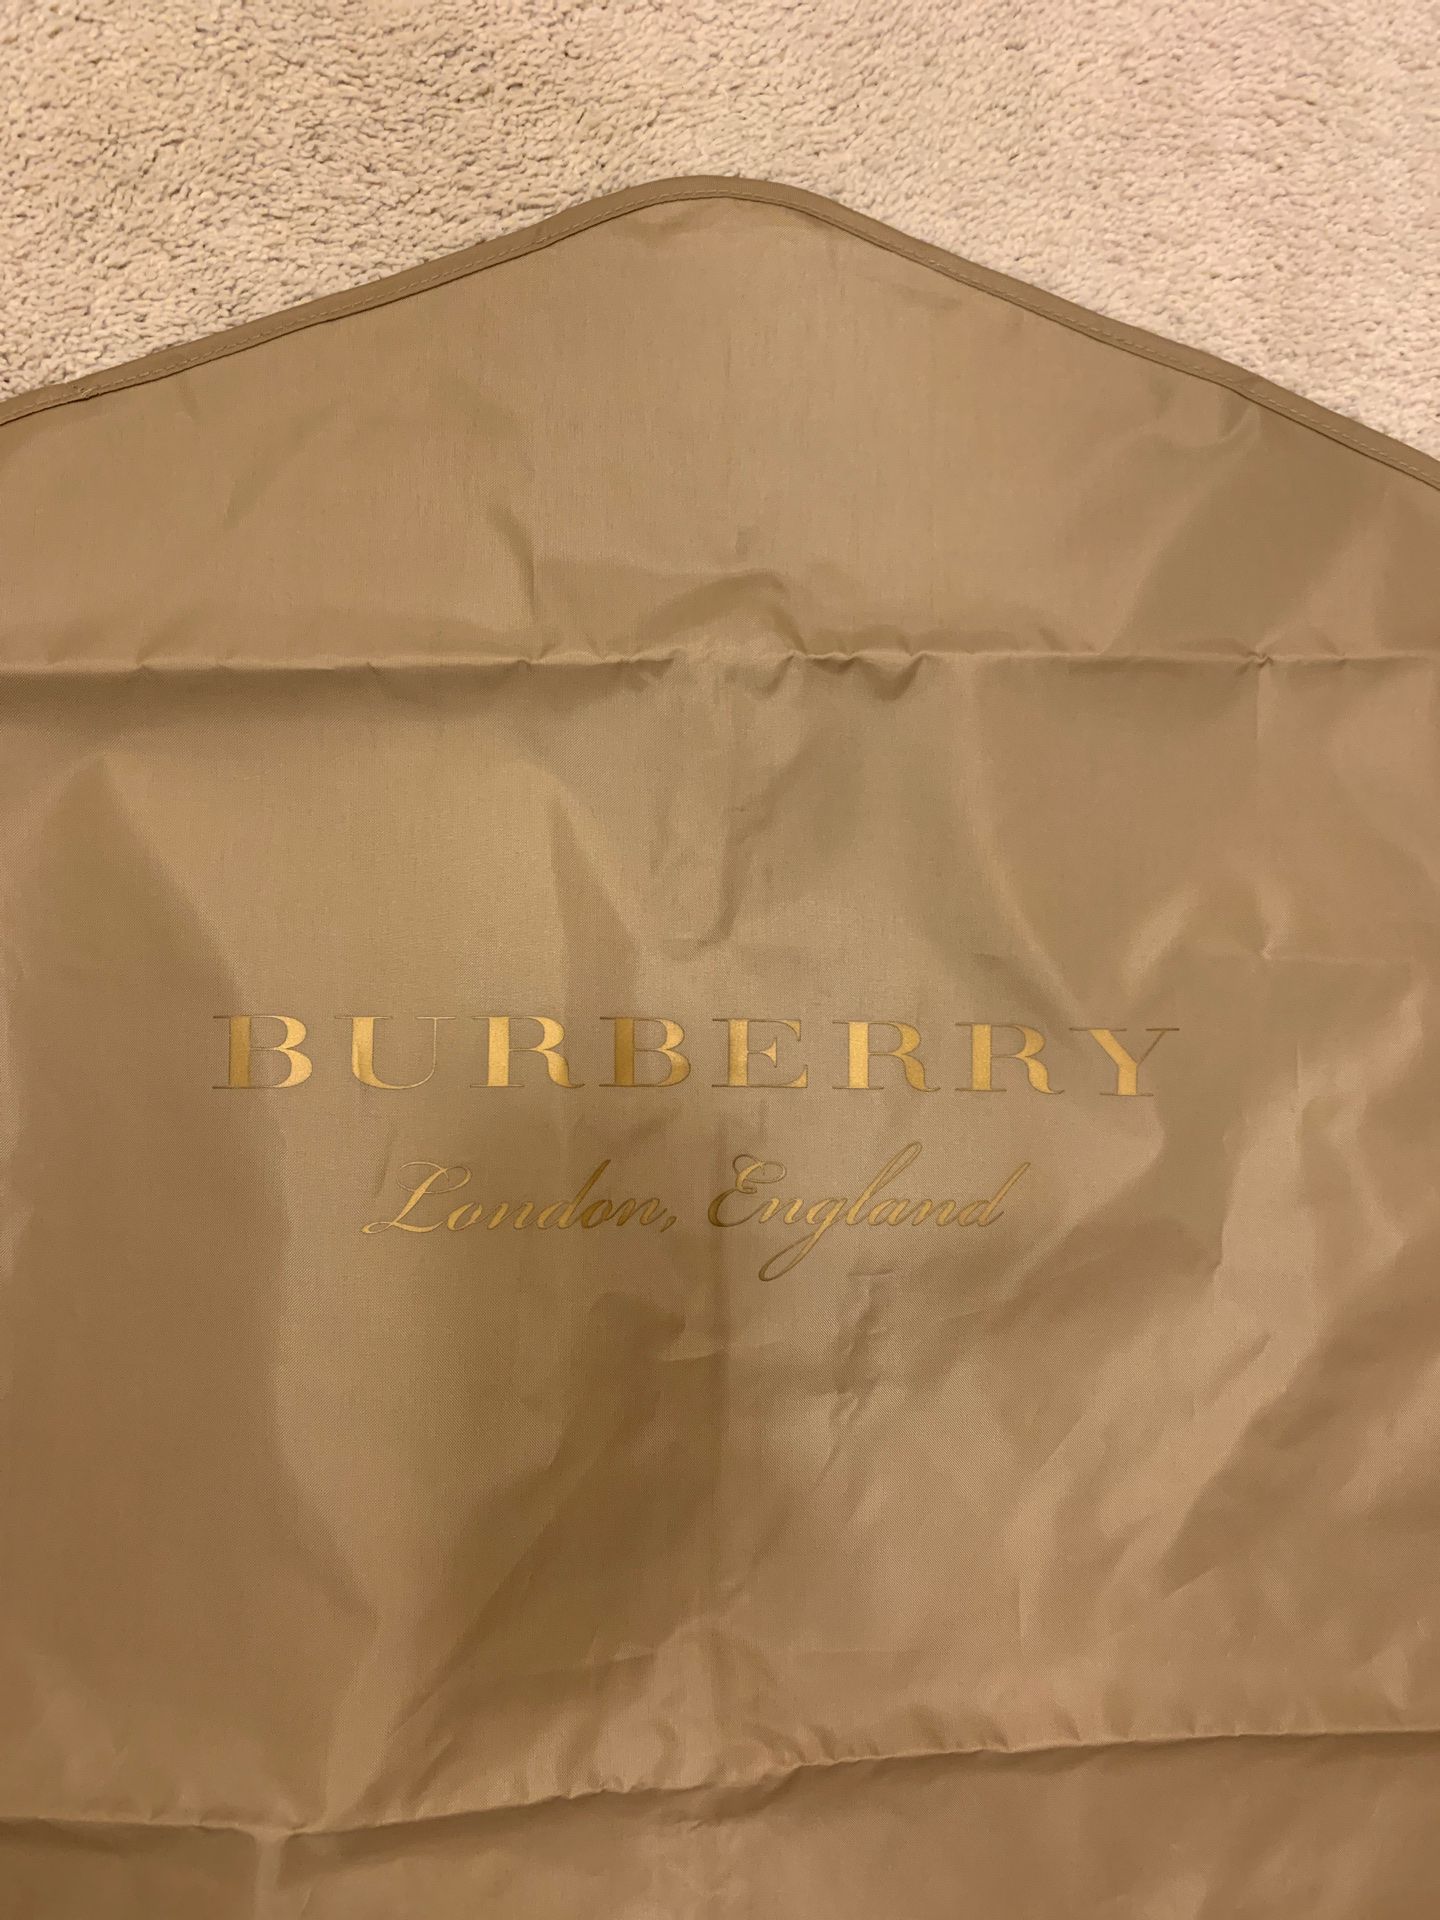 NEW in bag Burberry garment bag